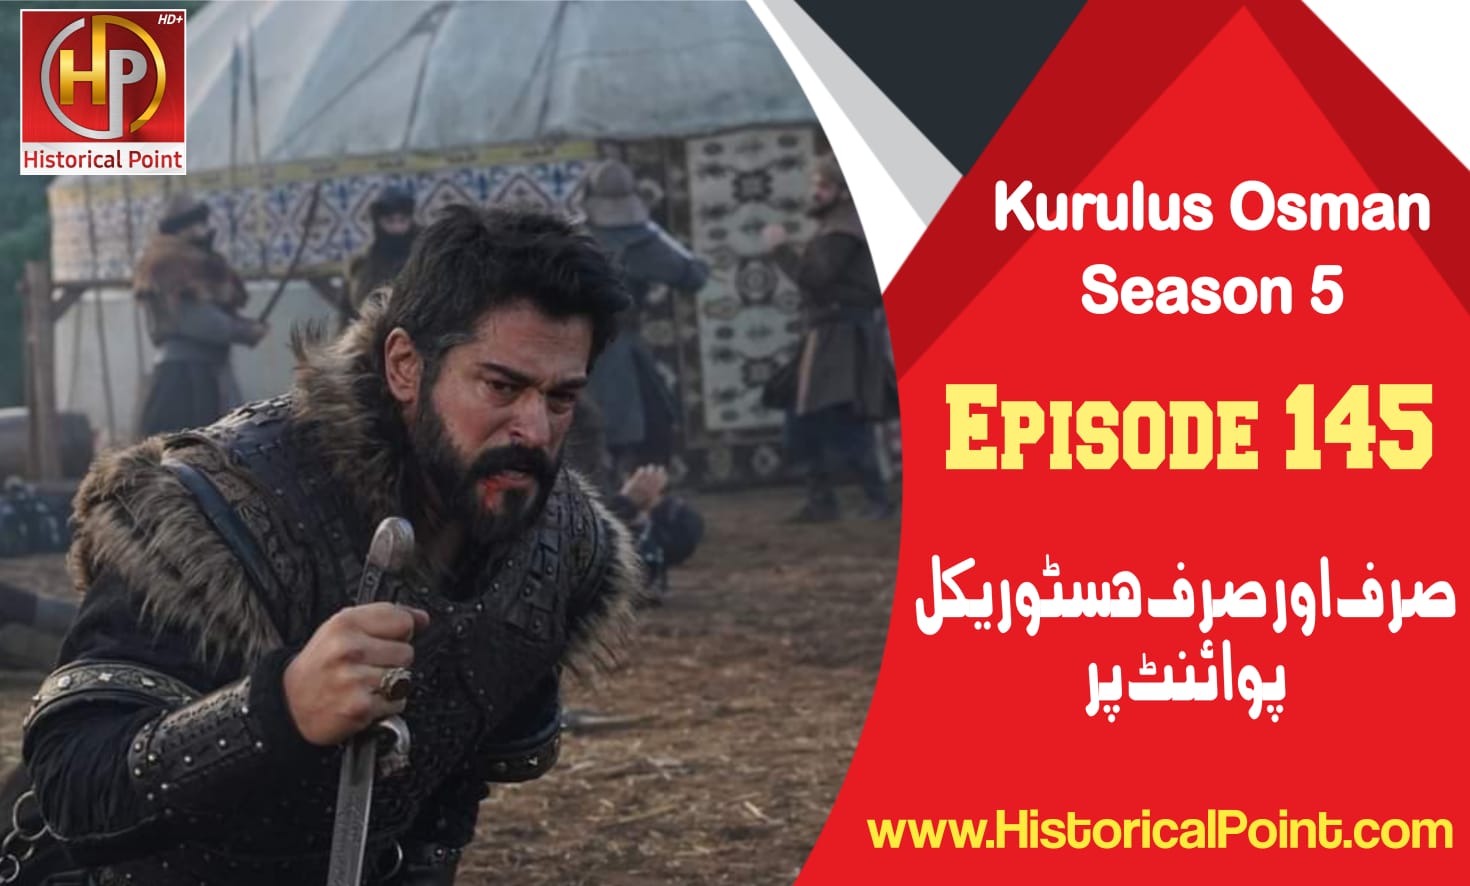 Kurulus Osman Season 5 Episode 145 In Urdu Subtitles